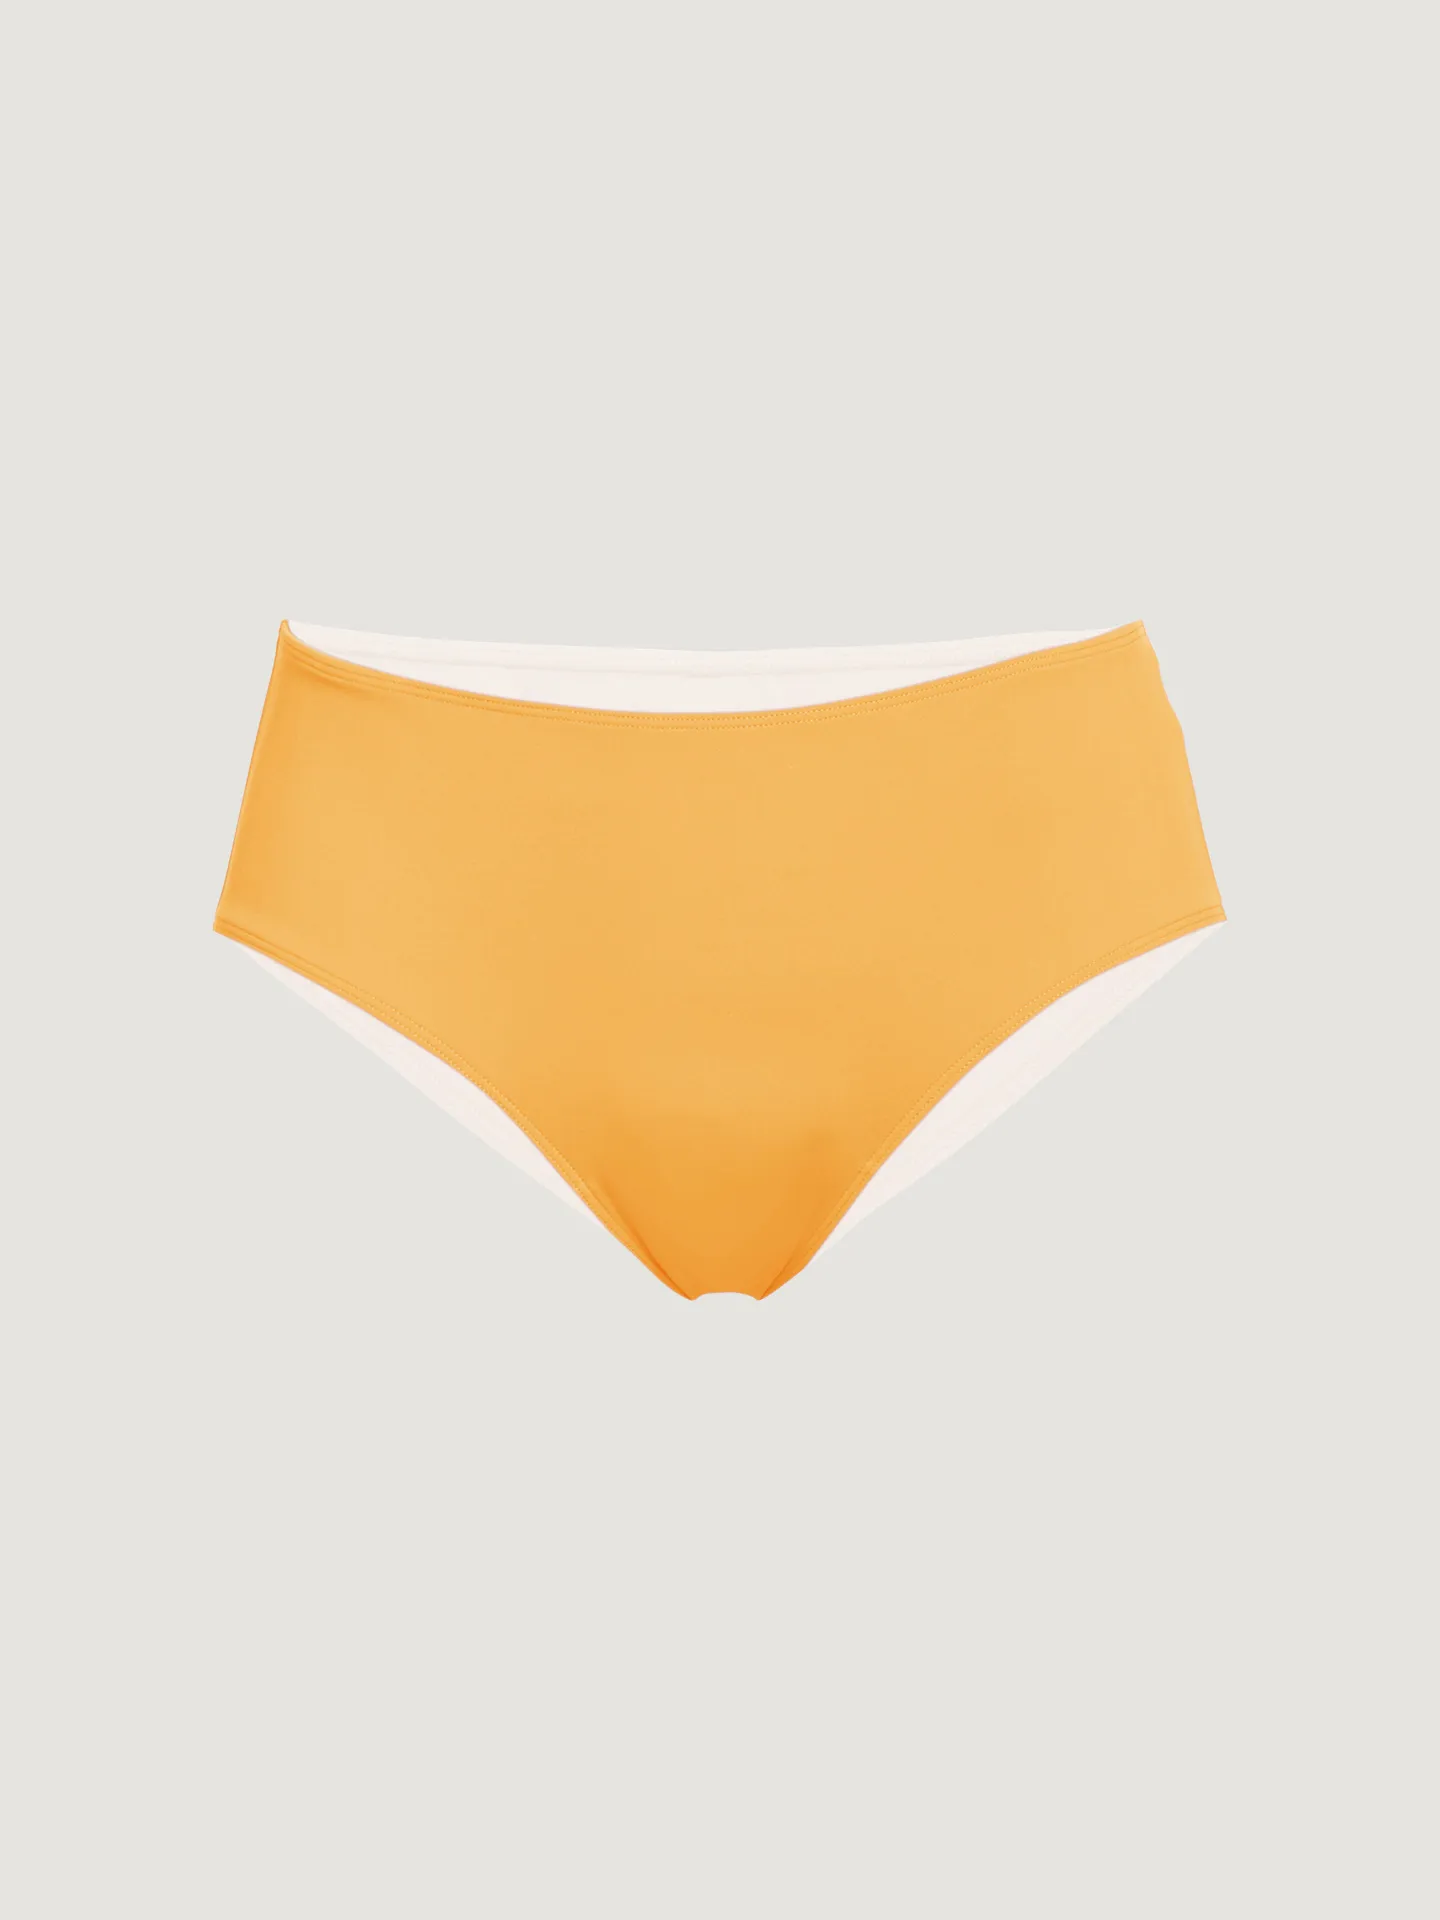 Wolford - Reversible Beach Shorts, Donna, mango/salt, Taglia: XS